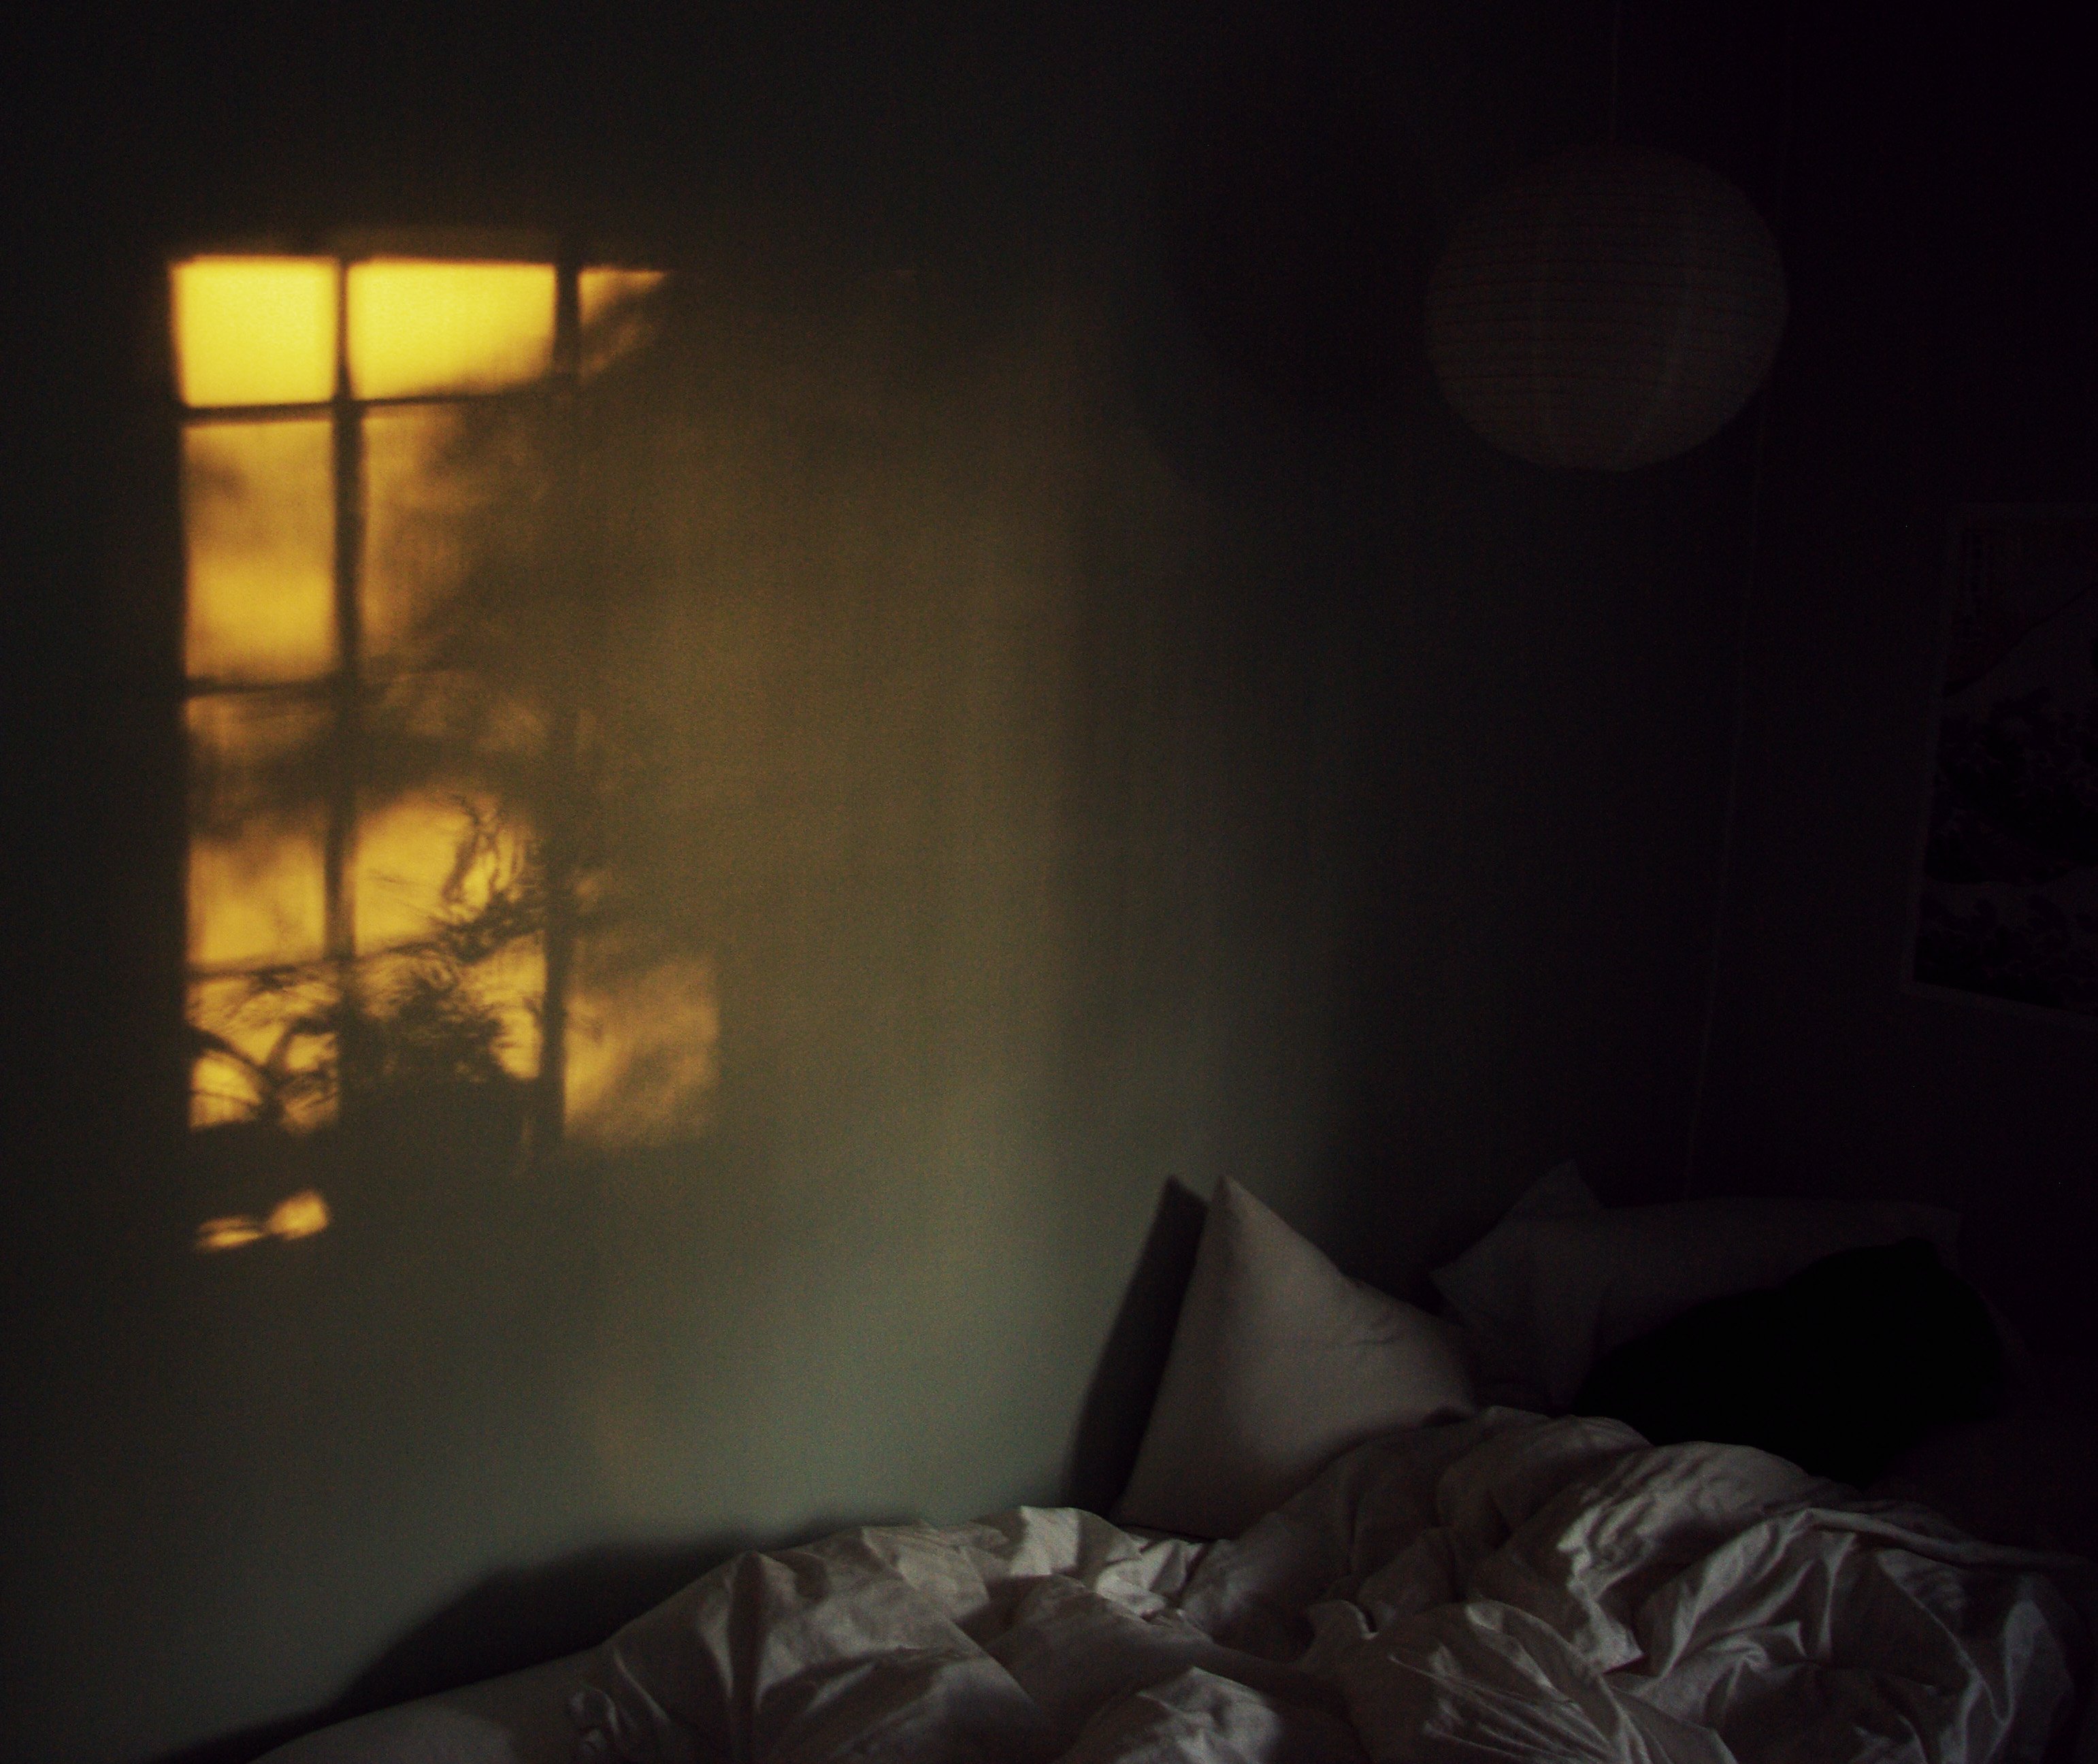 Темная уютная комната с кроватью. Уютная кровать в темноте. Полумрак в комнате. Кровать в темноте с окном. Постель в темноте